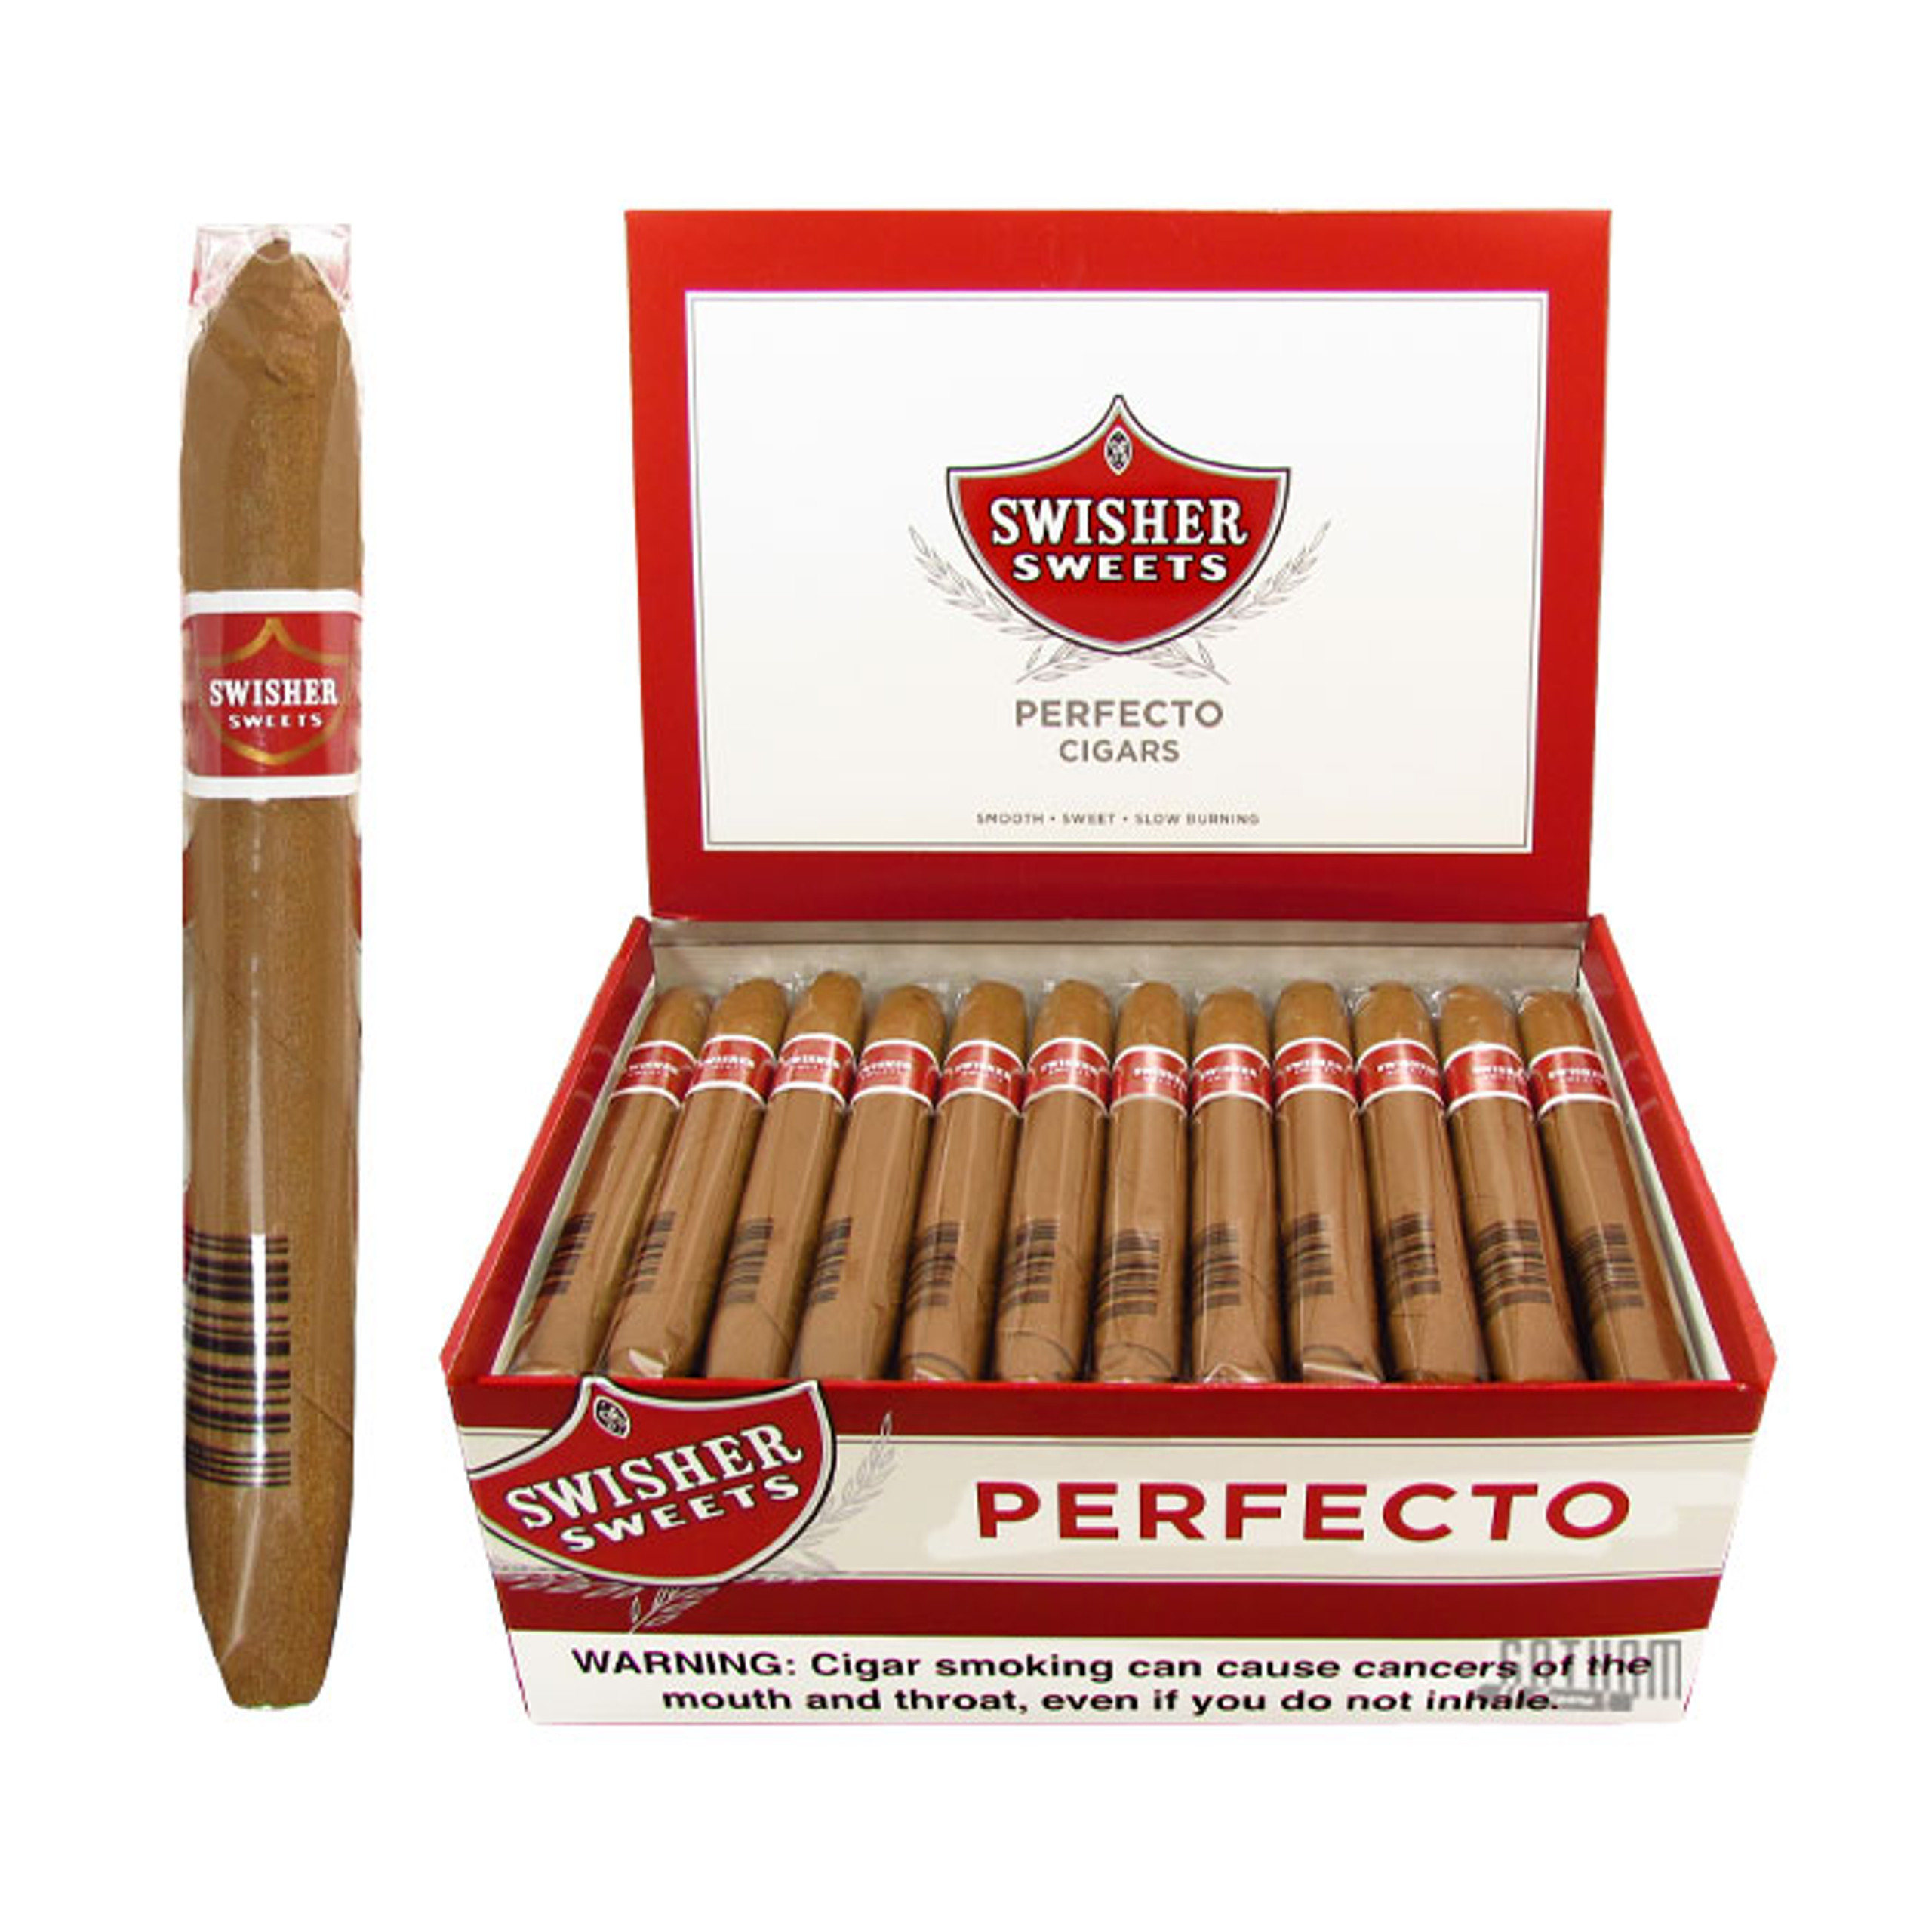 swisher-sweets-perfecto-box-gotham-cigars